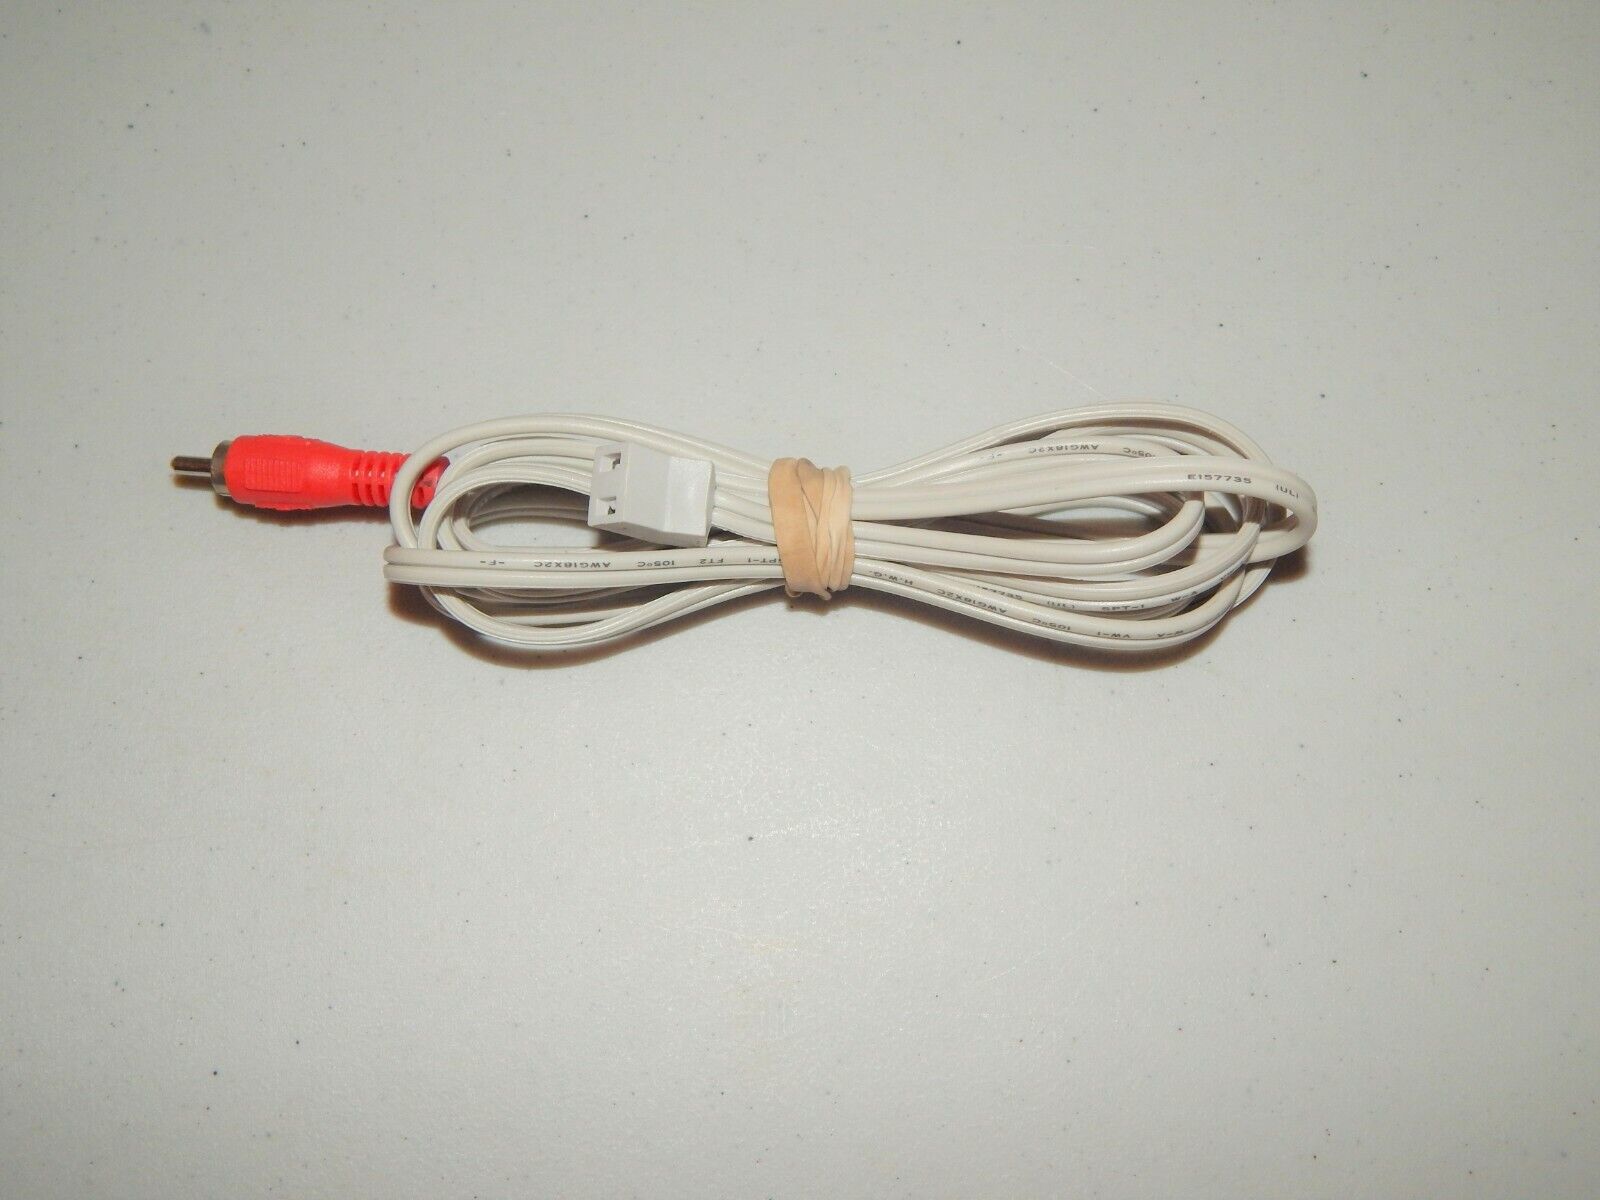 Boston Acoustics Genuine Red Computer Speaker Cable FREE SHIP!! Read Description